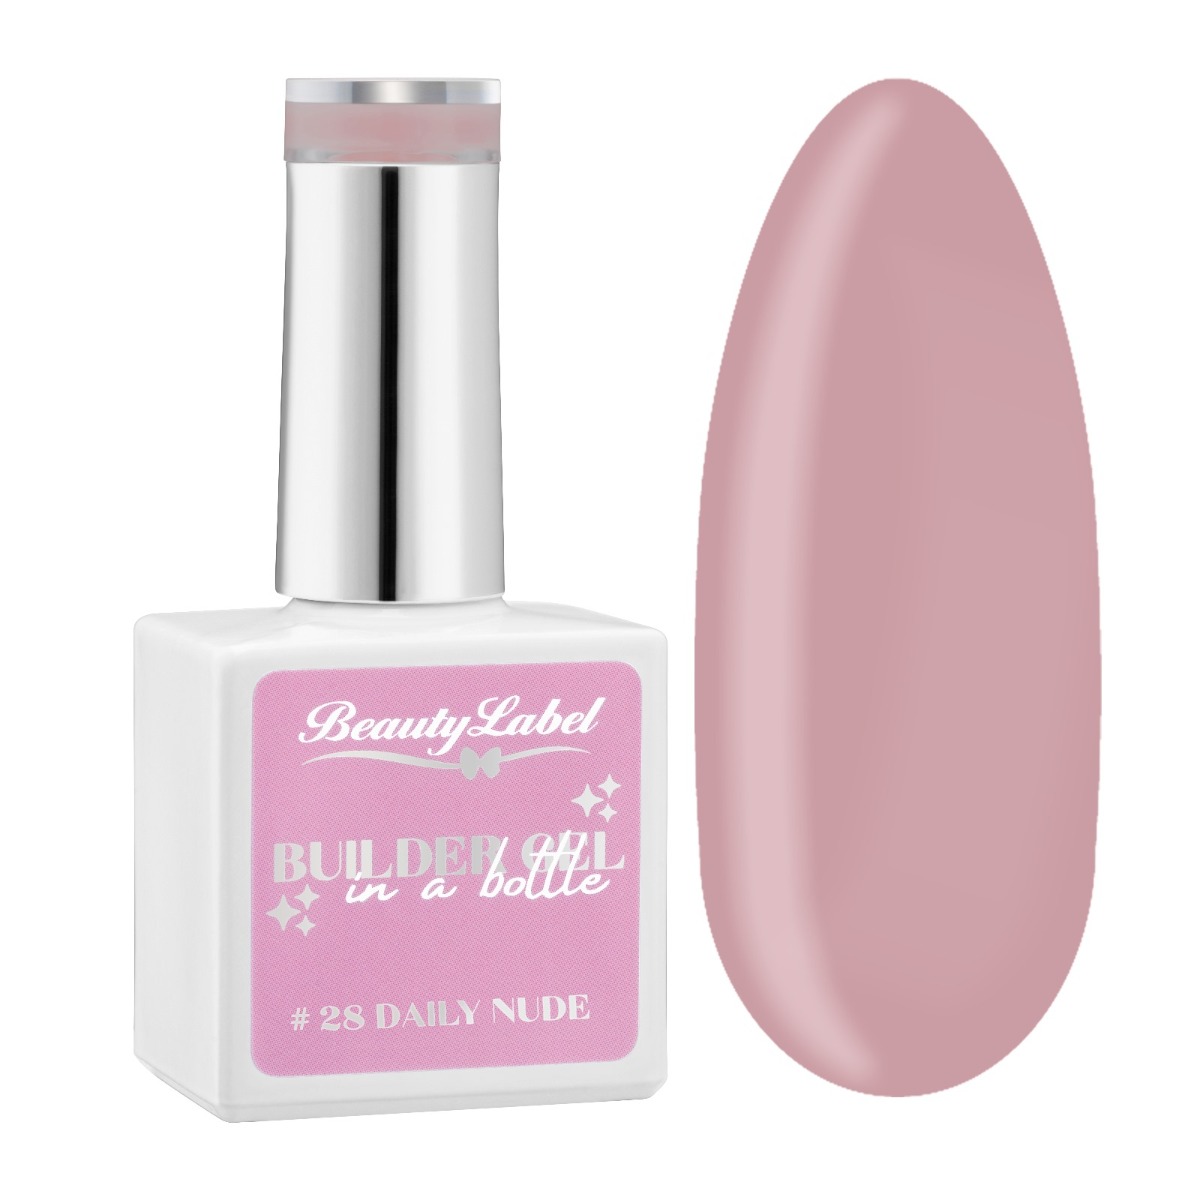 Beauty Label Builder in a bottle #28 Daily nude